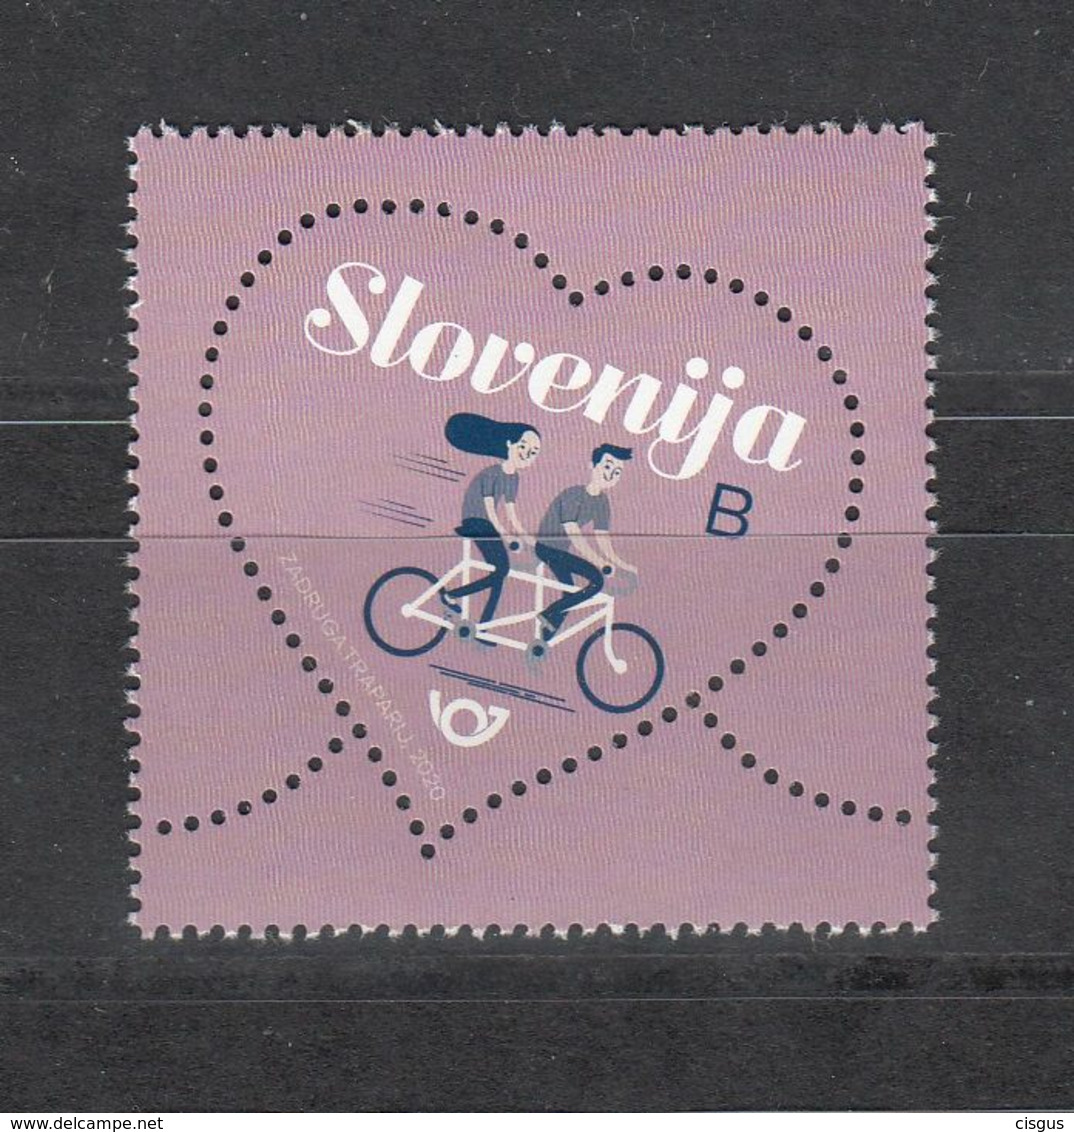 Slovenia Slowenien 2019 MNH** 2020-5 Greetings Stamp - Love - Slovenia